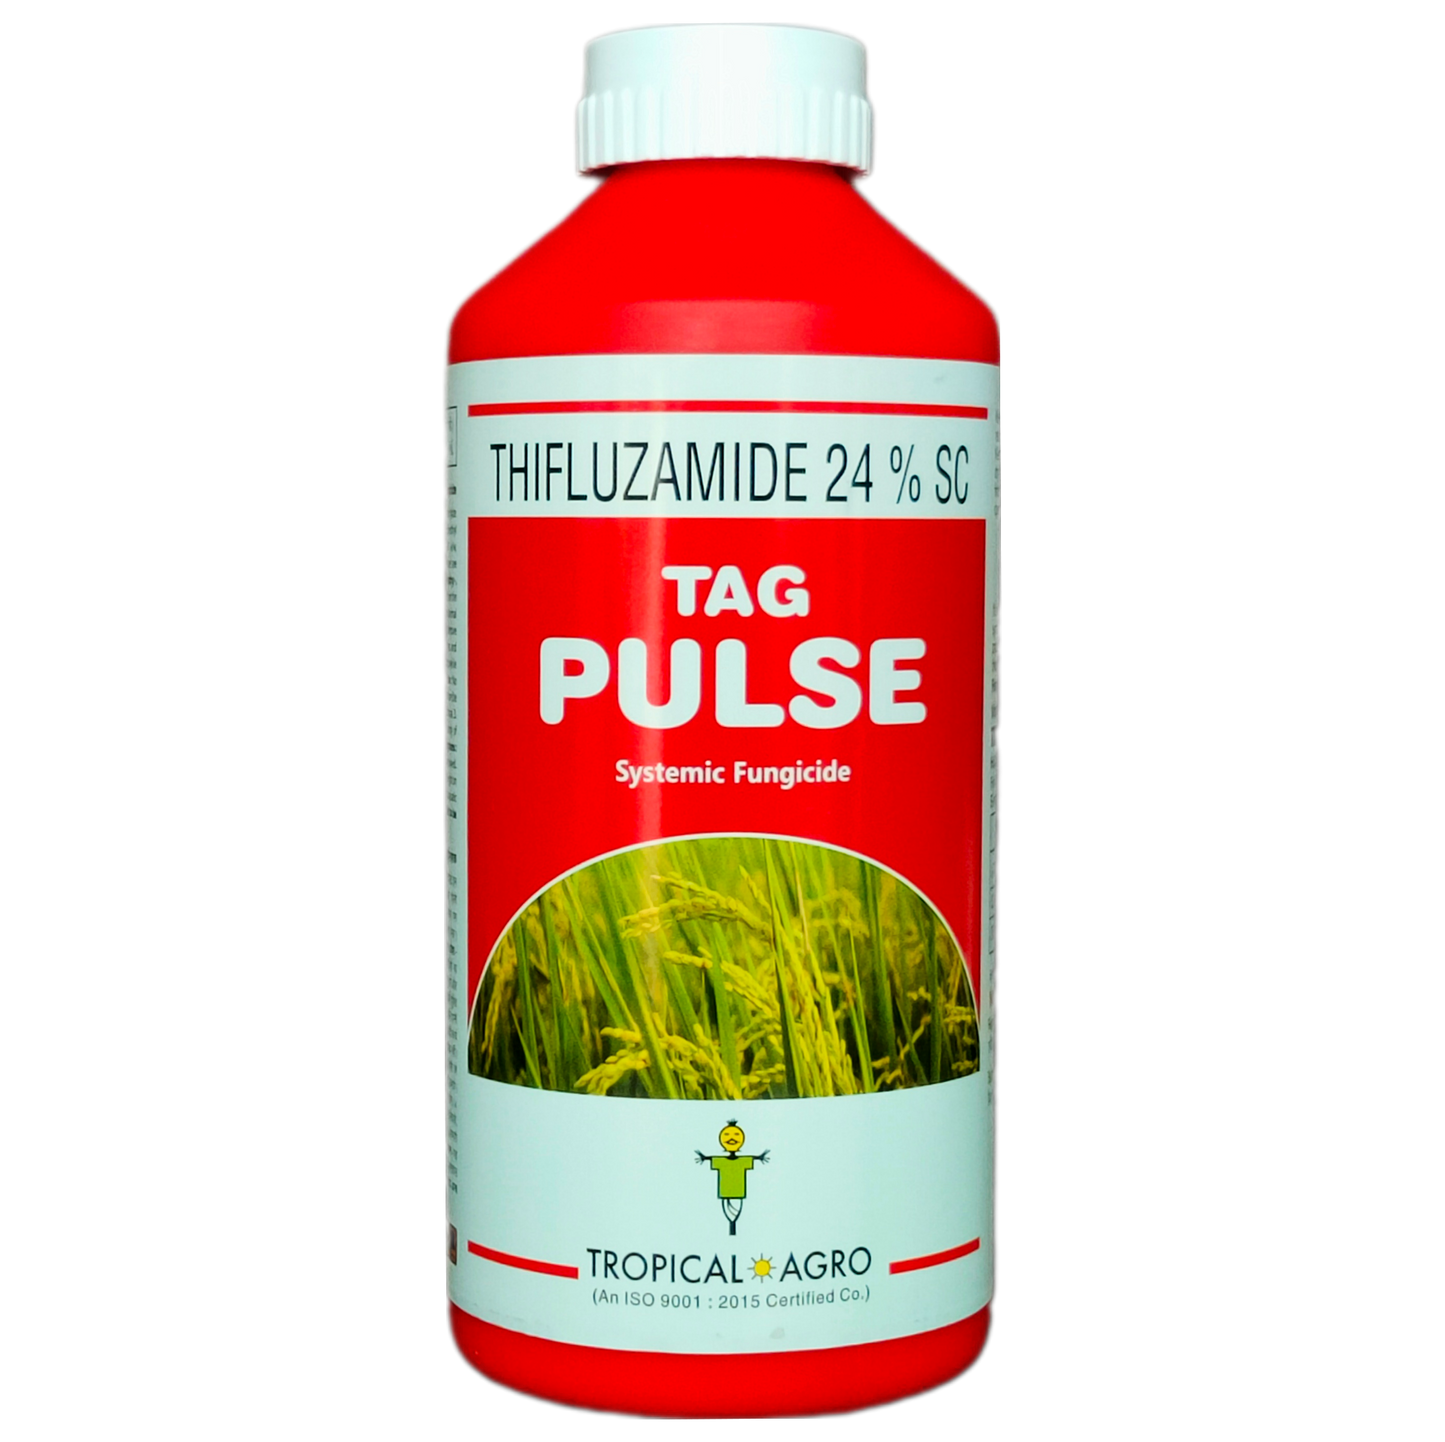 Tag Pulse - Thifluzamide 24% SC Fungicide